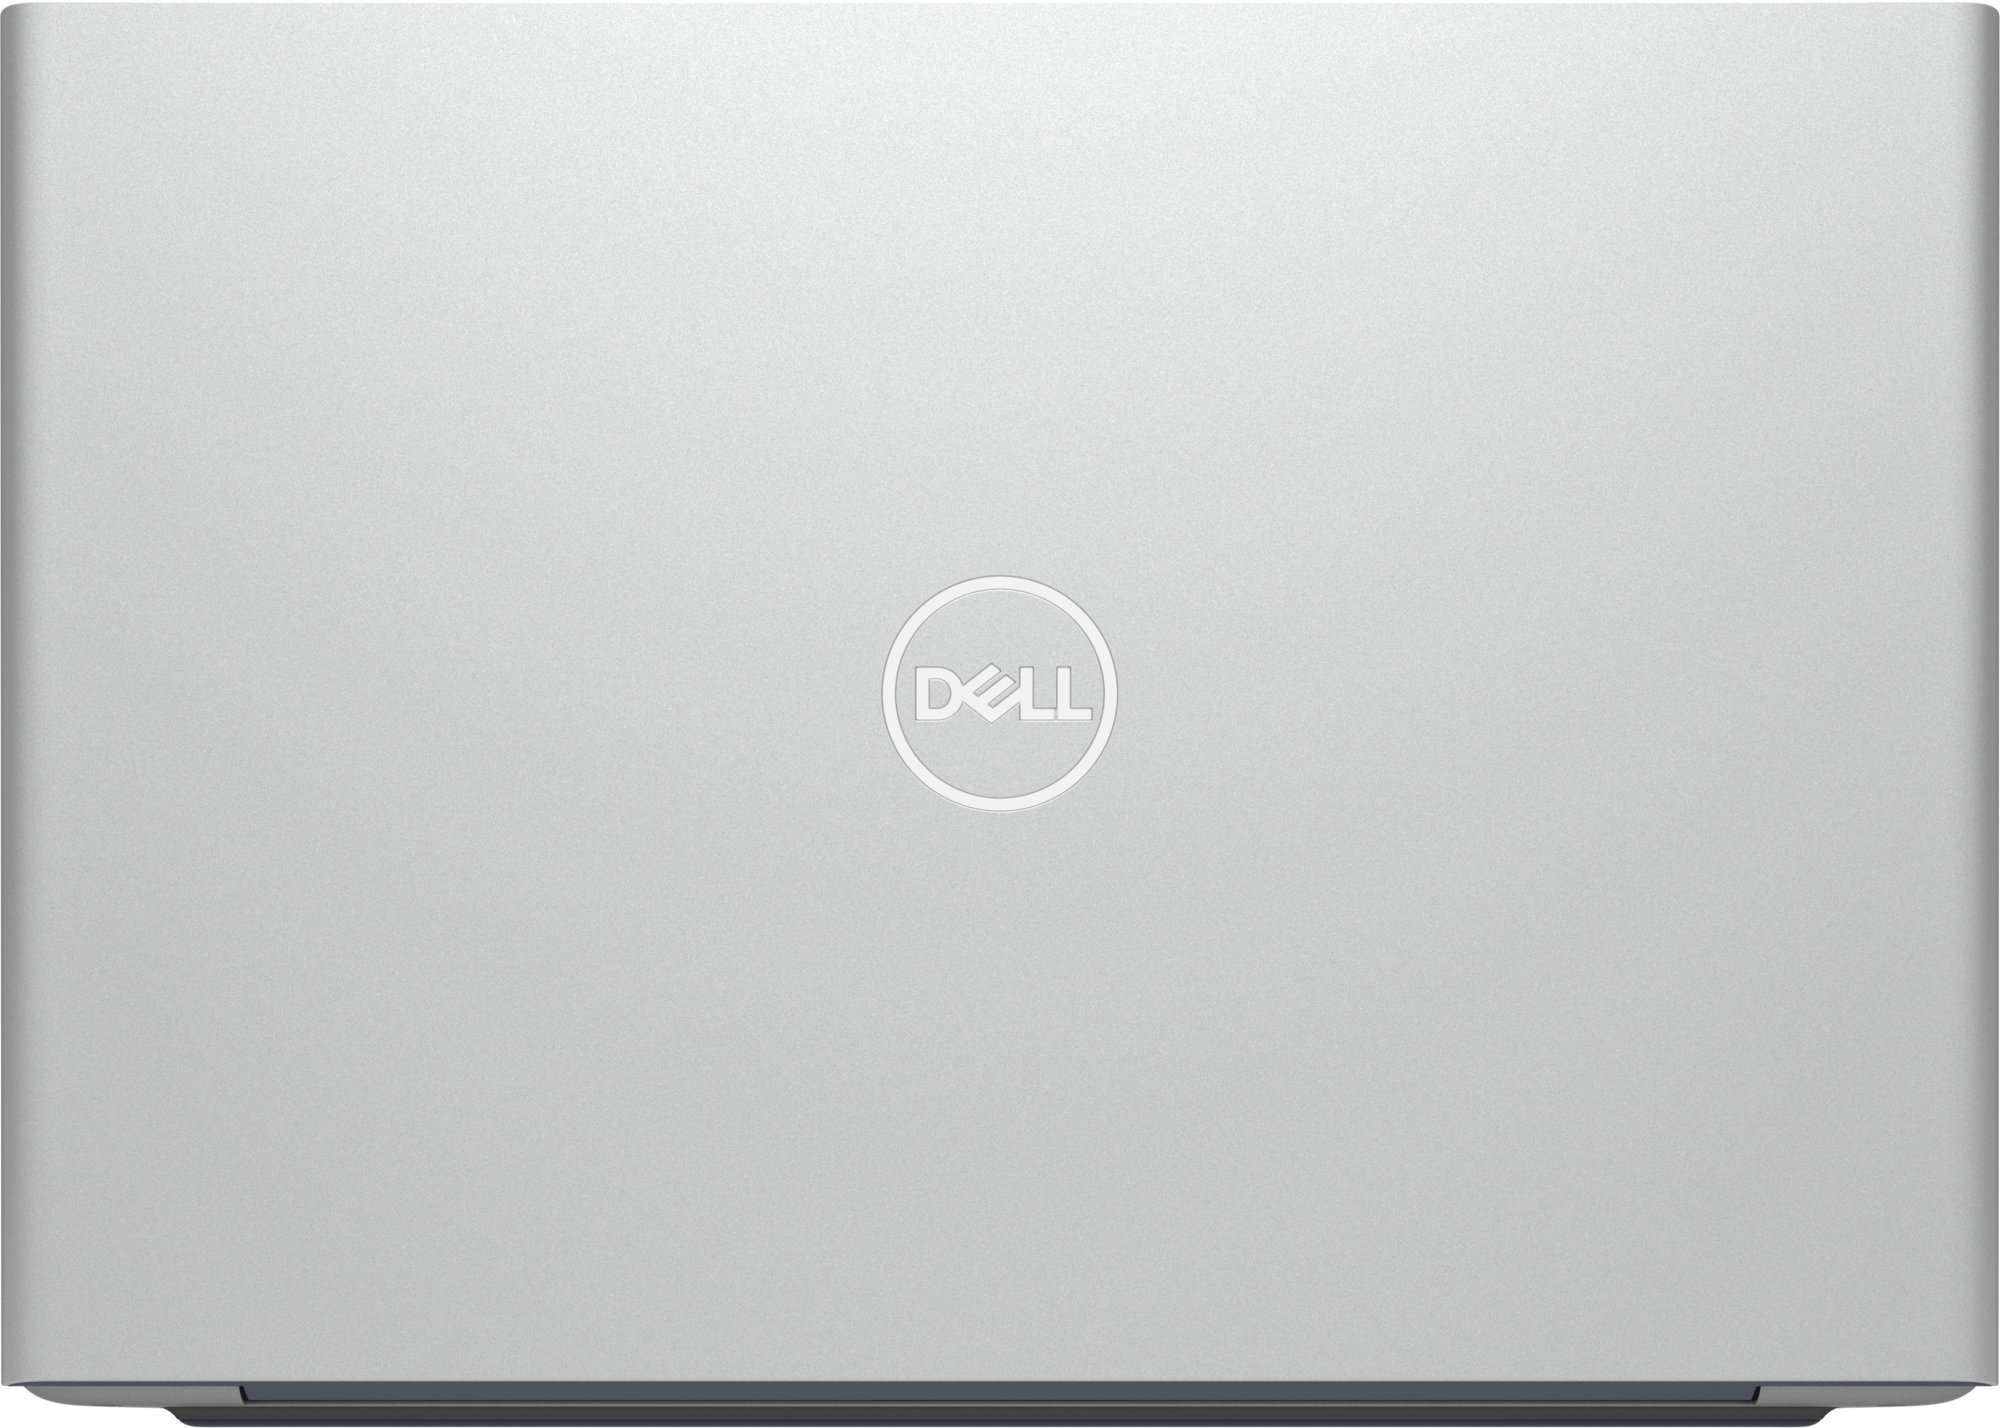 Dell Vostro 14 5471 - Specs, Tests, and Prices | LaptopMedia.com